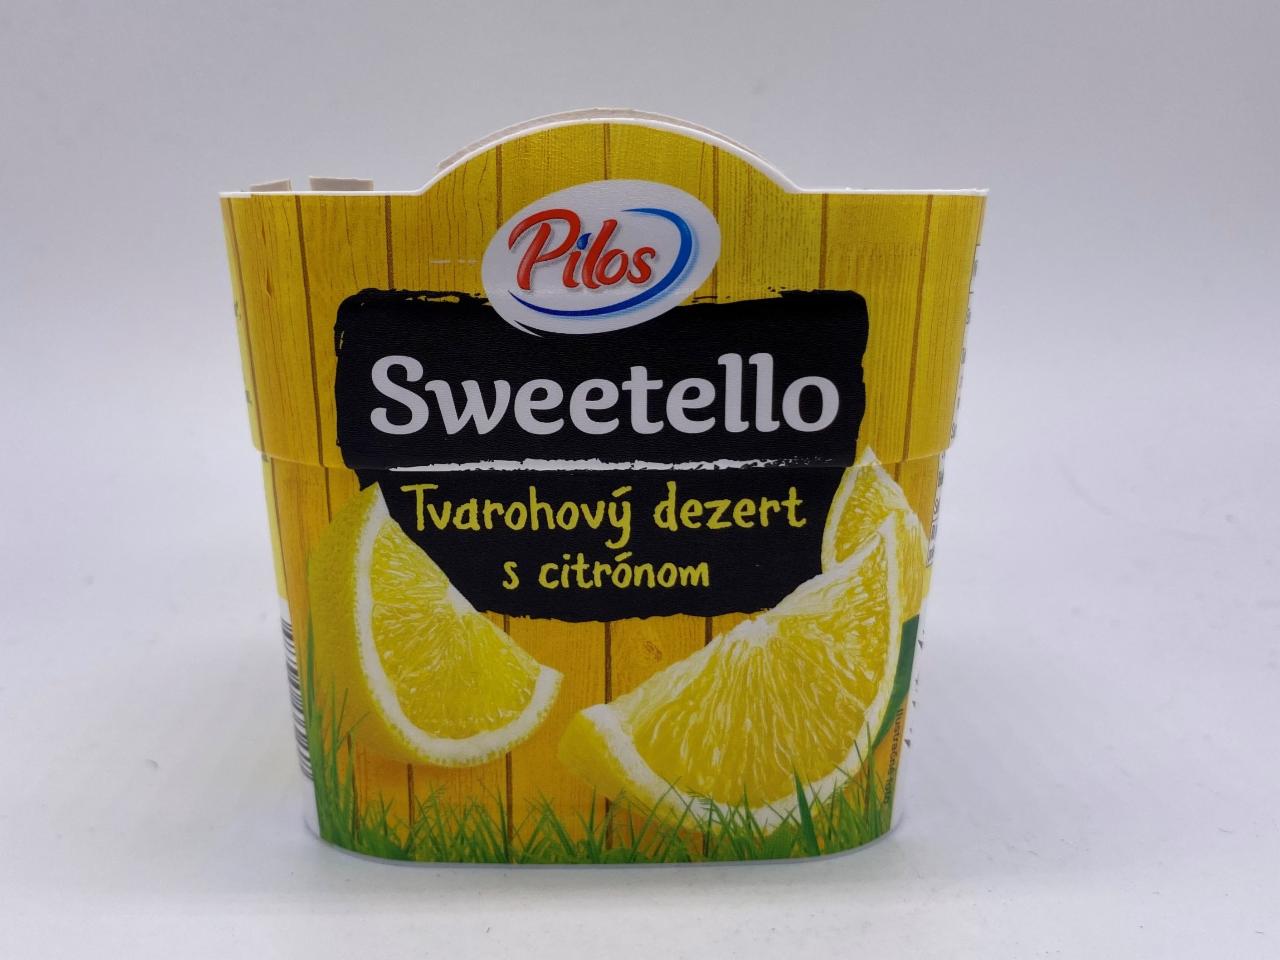 Fotografie - Pilos Sweetello tvarohový dezert s citrónom